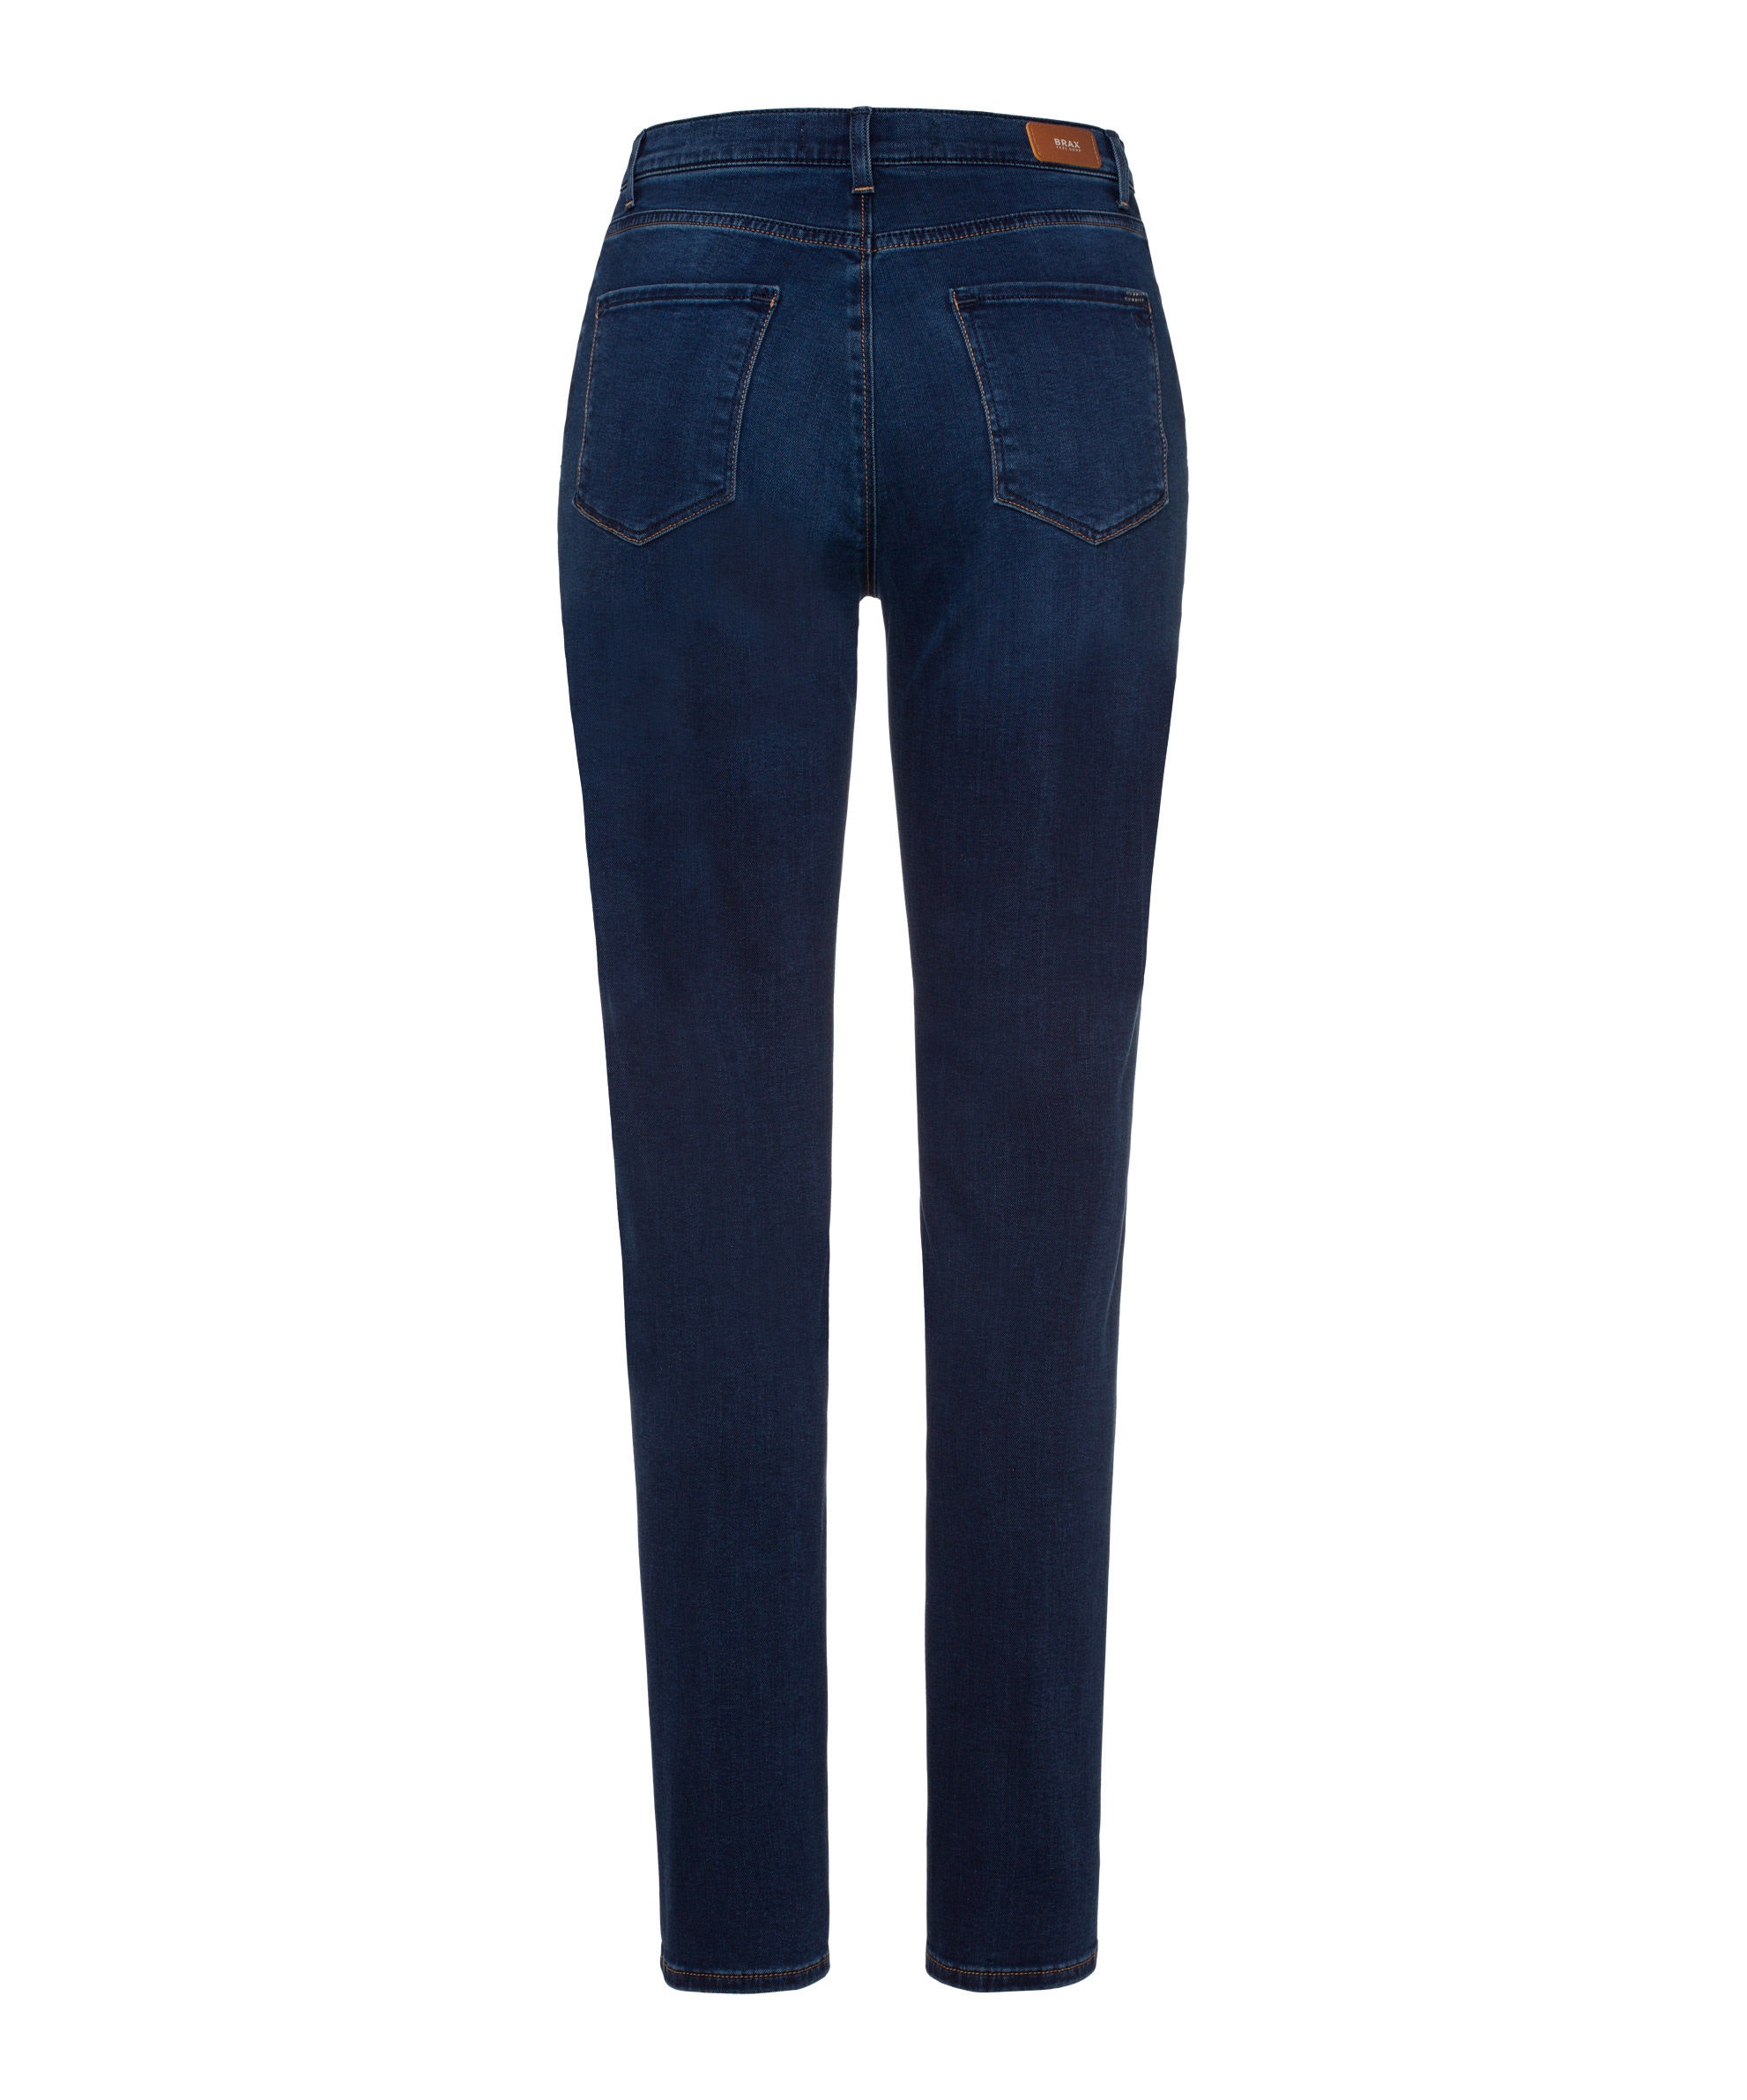 | Jeans Damen Jeans-Manufaktur MARY | Brax | dark | Brax clean BRAX 70-4000.22 9916920 Jeans Mary | DENIM blue